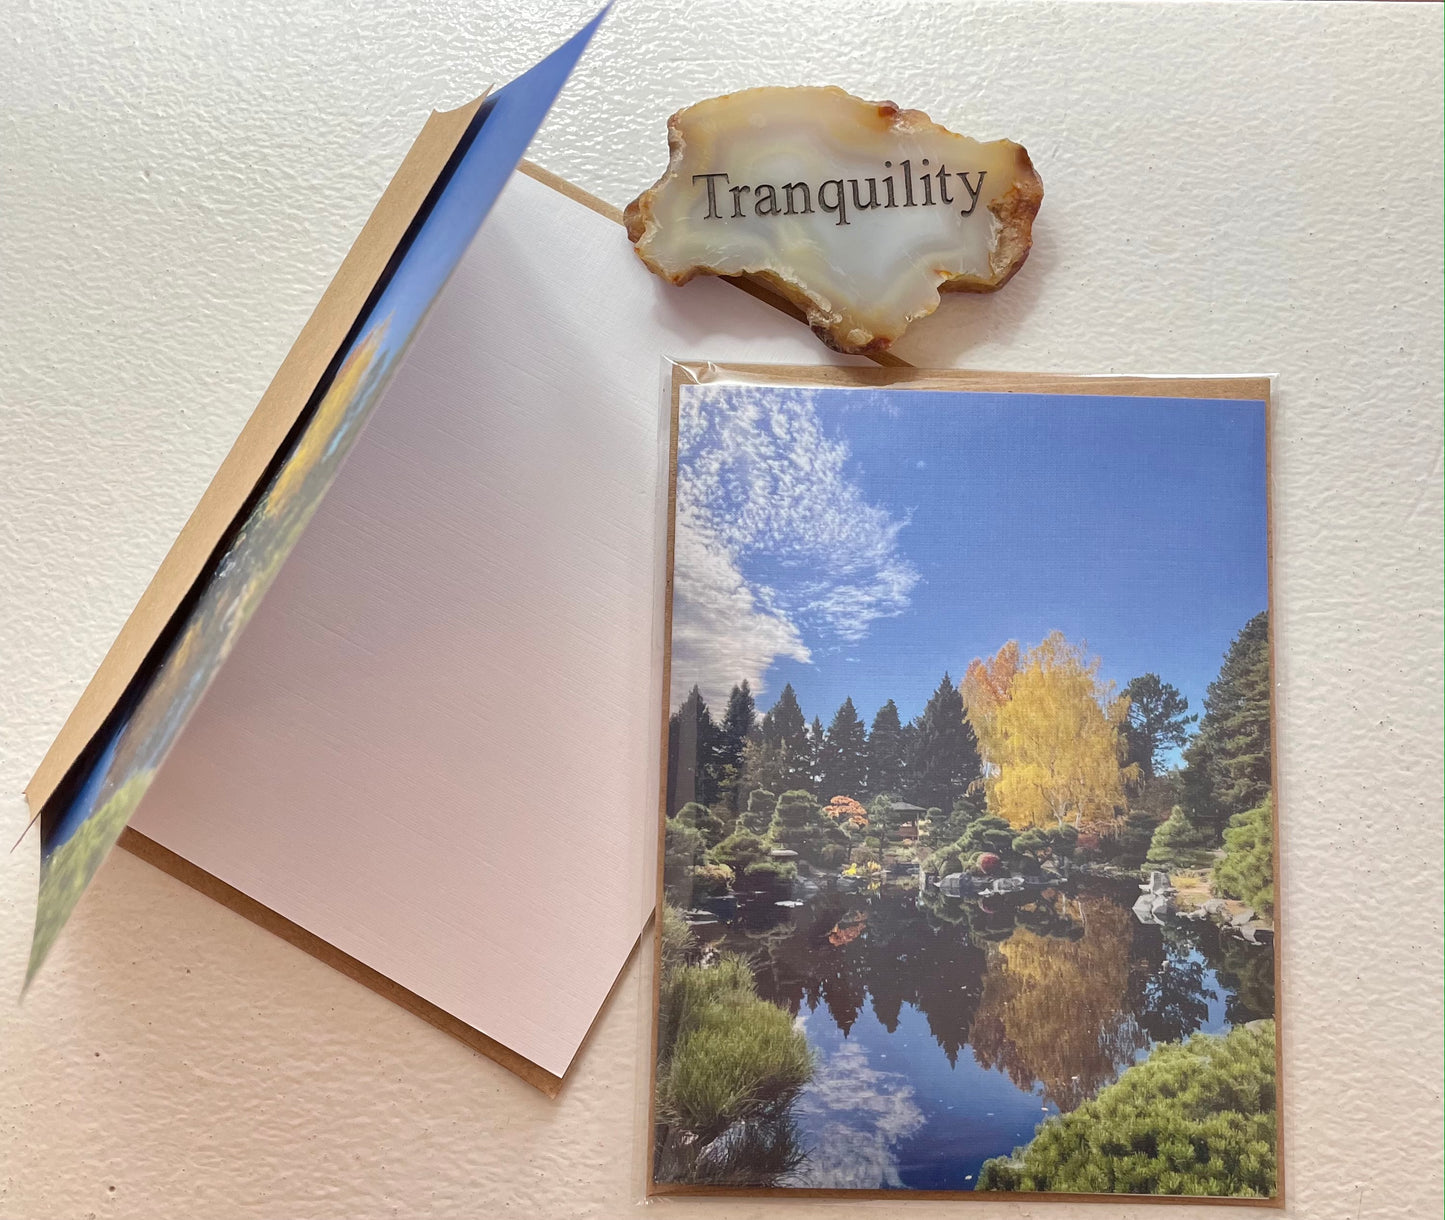 Reflections Japanese Gardens Original Nature Photography Single Greeting Card with Kraft Envelope